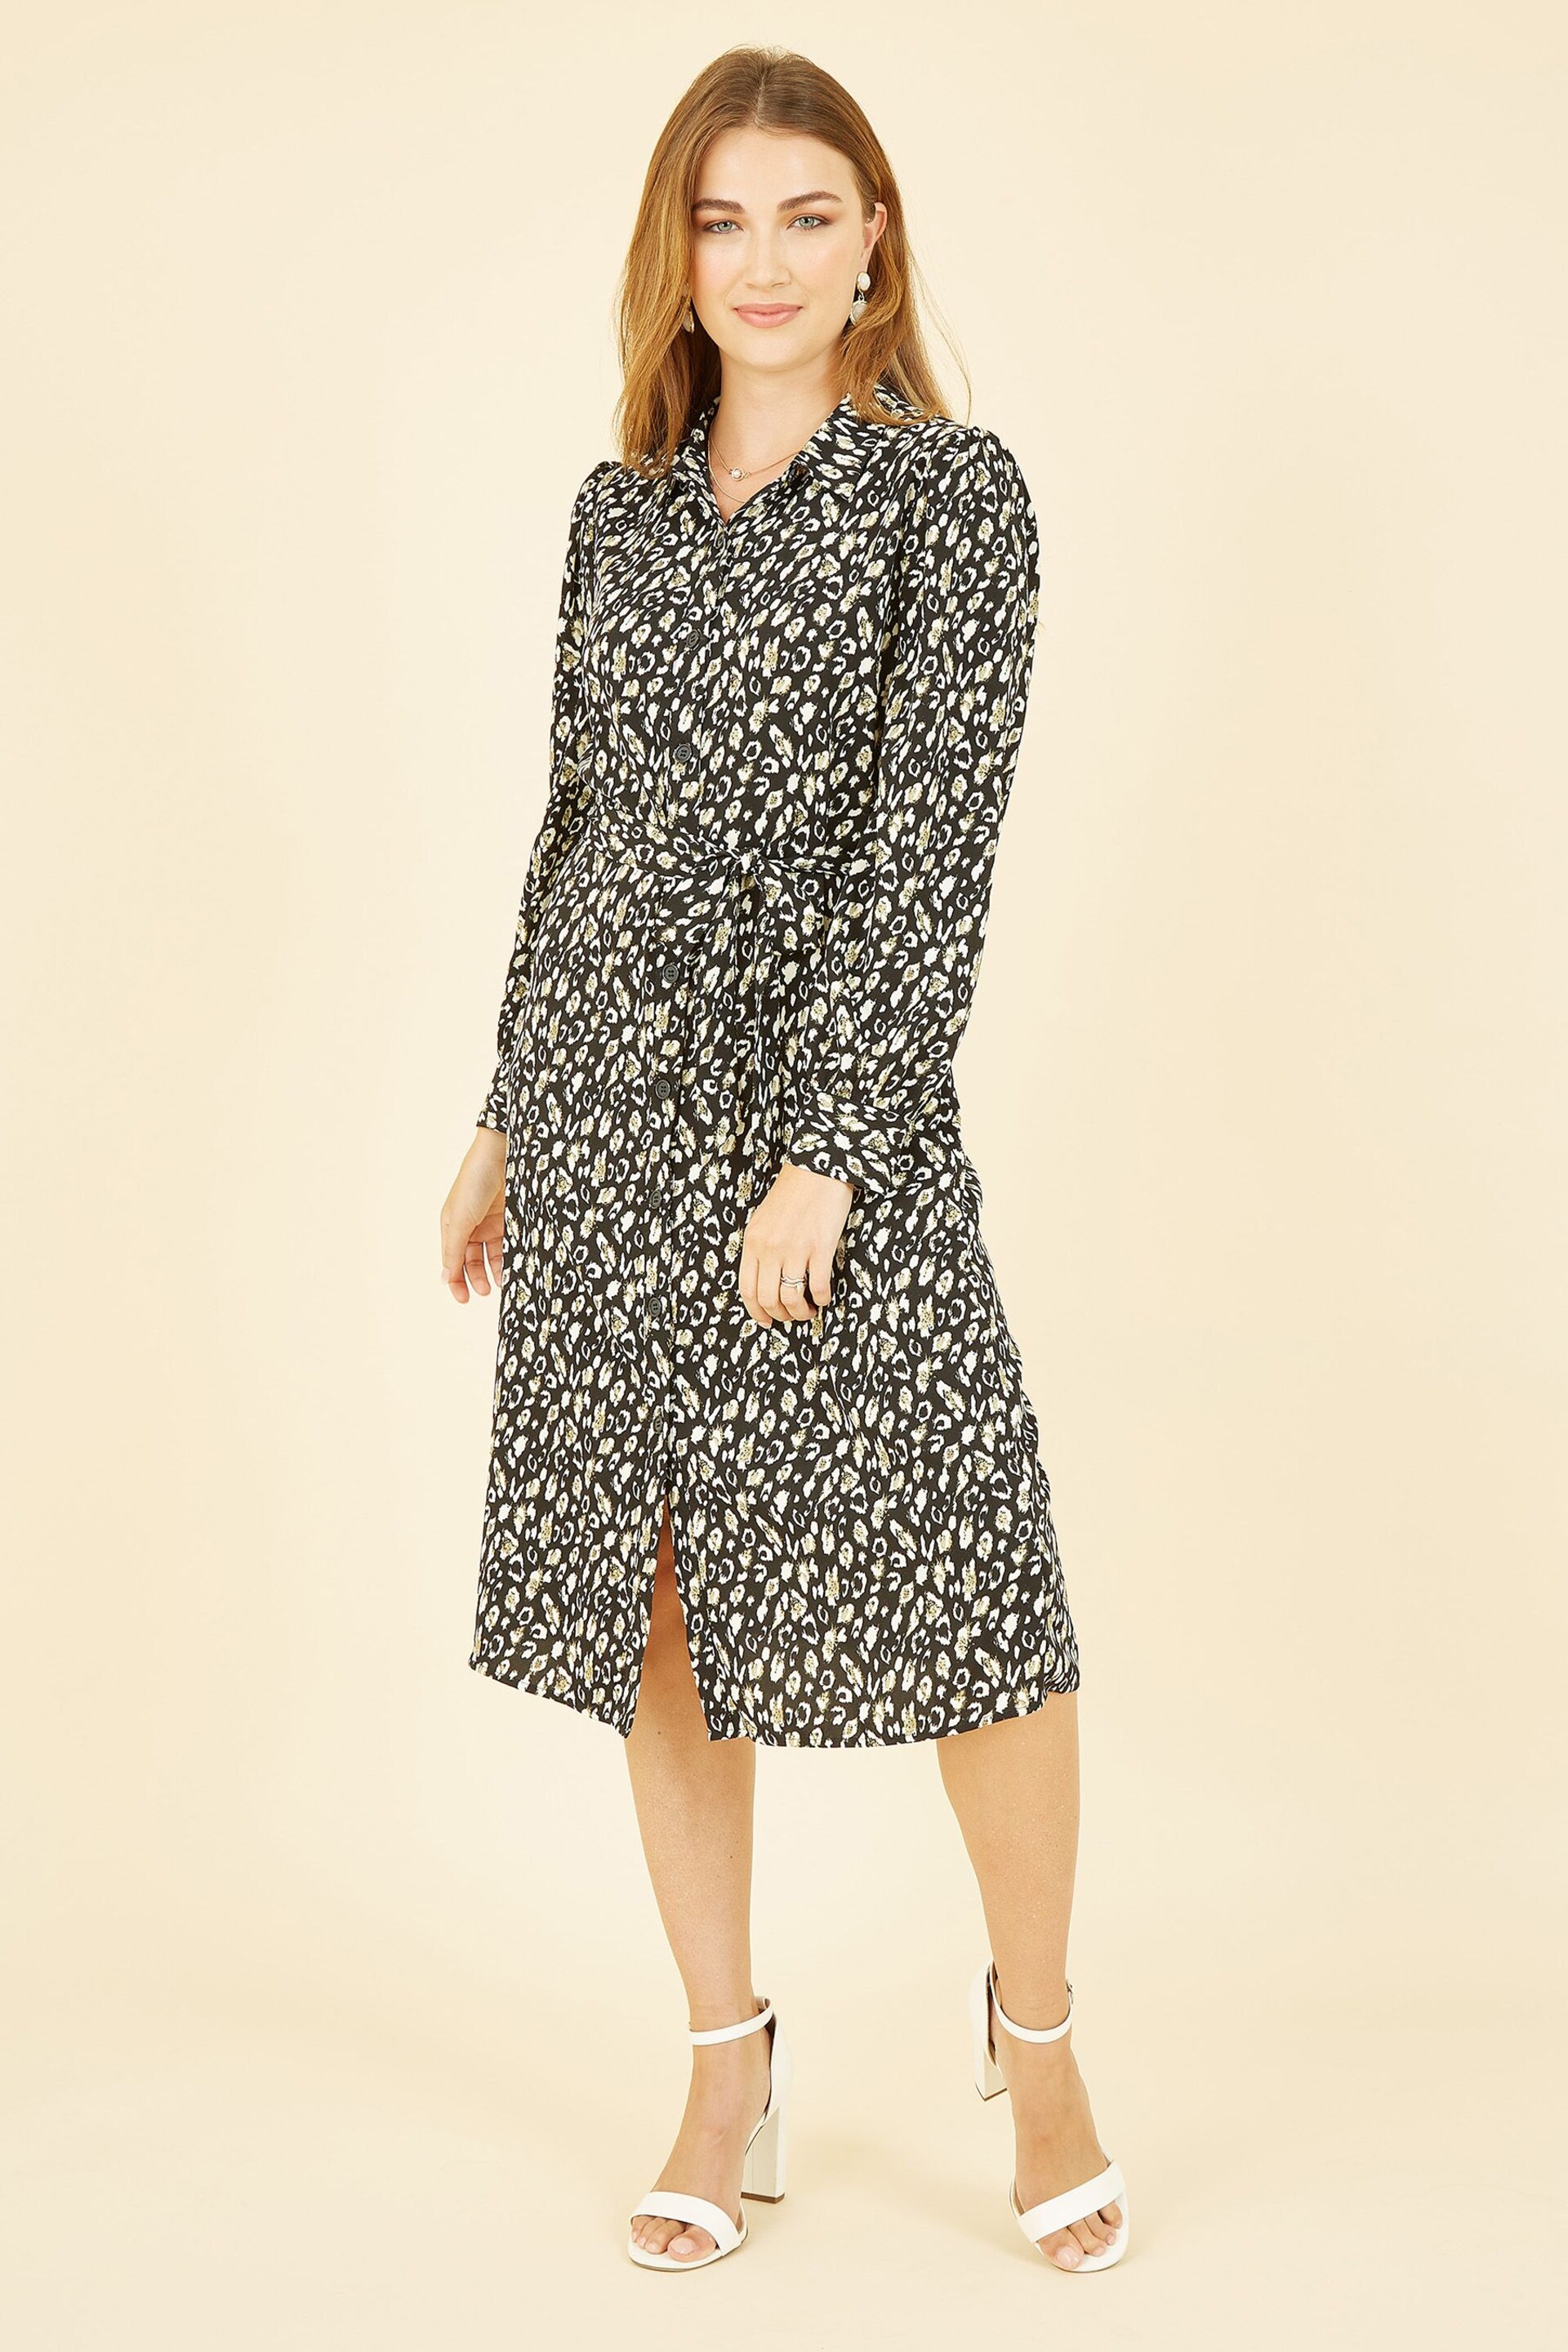 Yumi Black Leopard Print Shirt Dress - Image 1 of 5